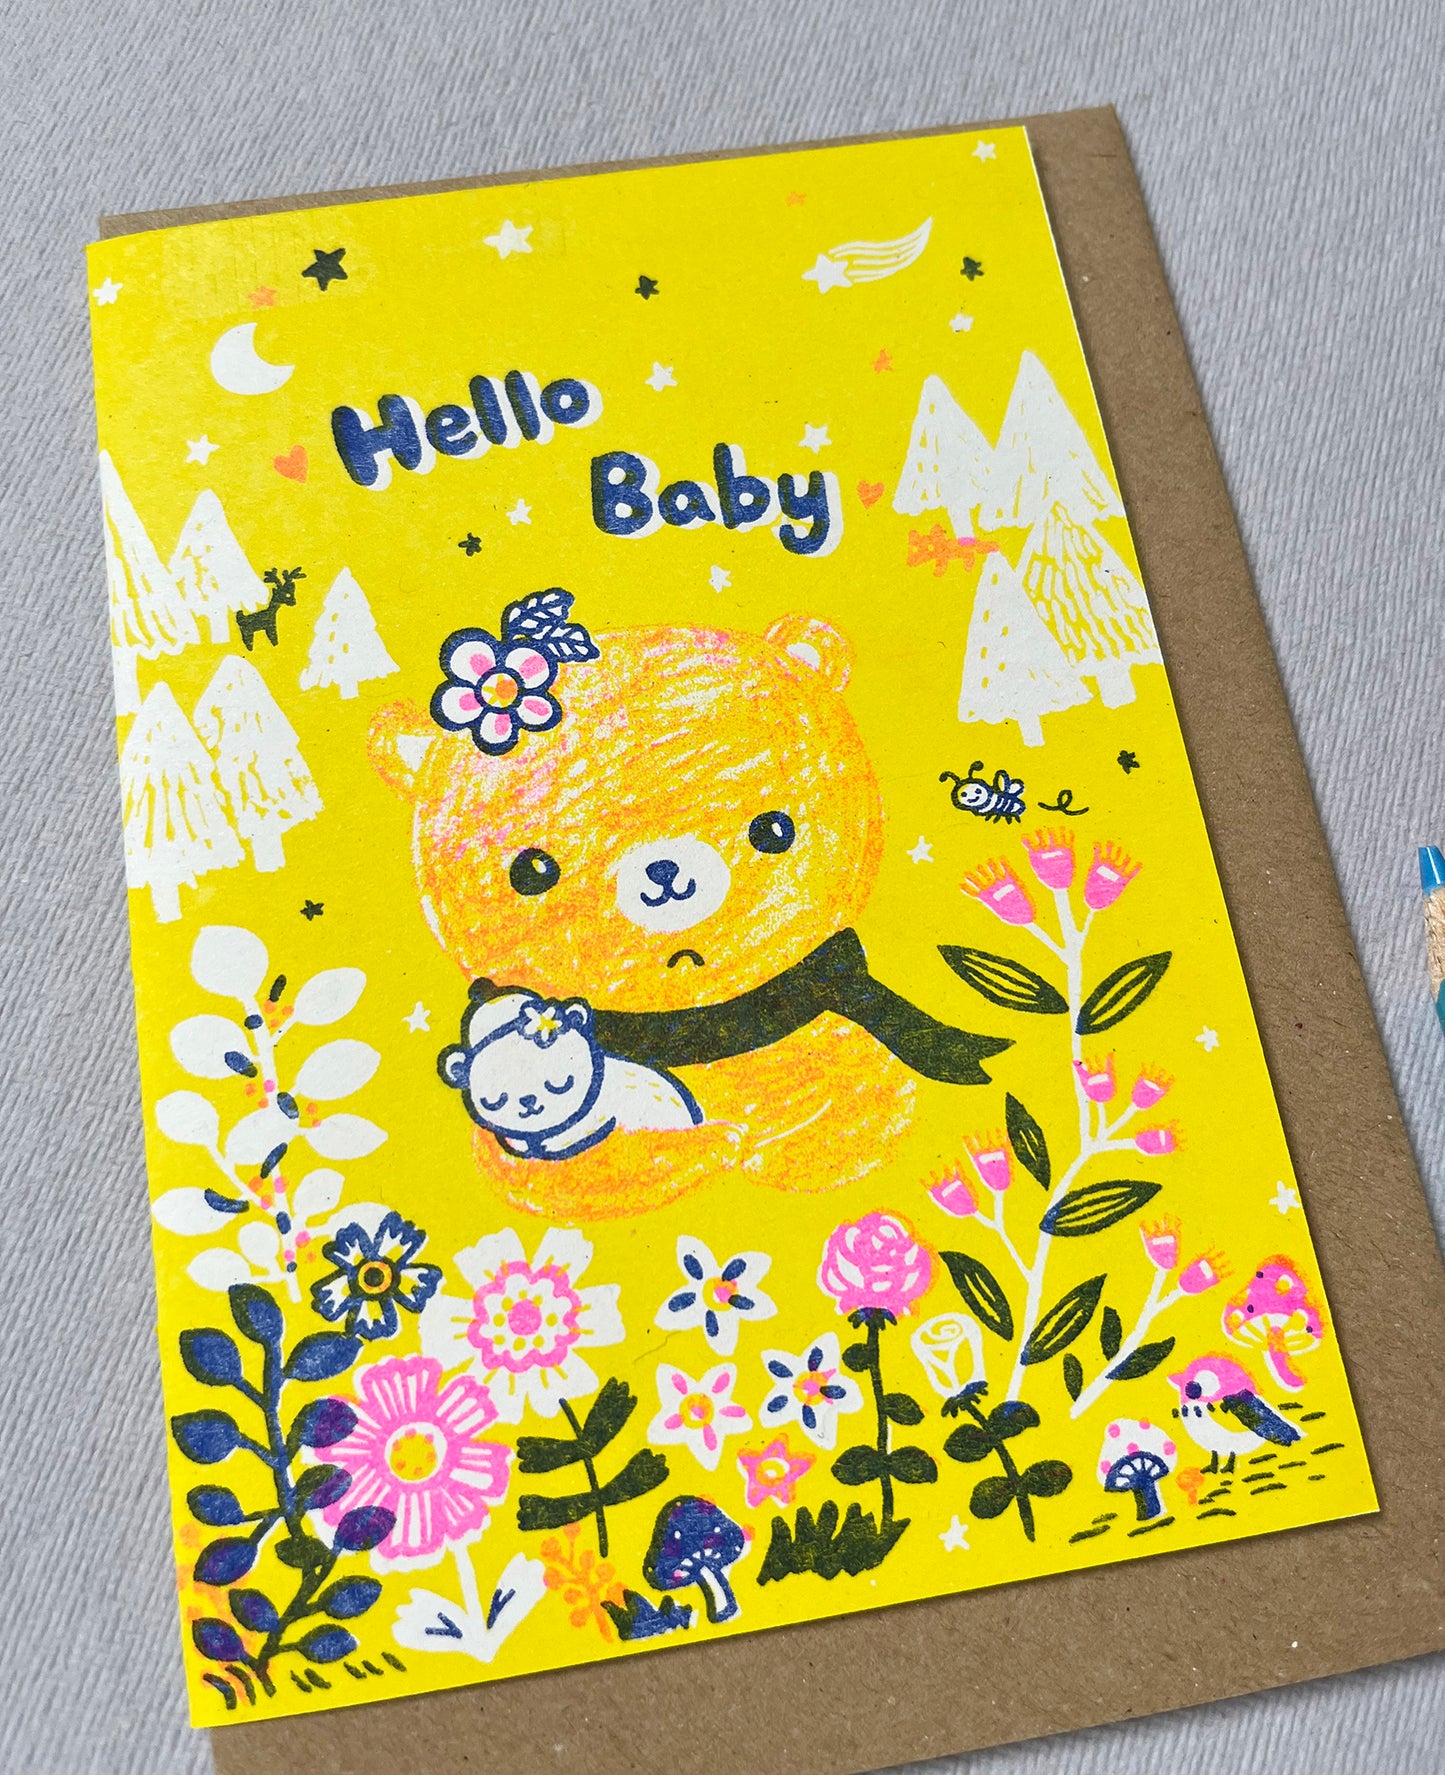 Hello Baby bear - A6 risograph greeting Card - riso cute bear new arrival card